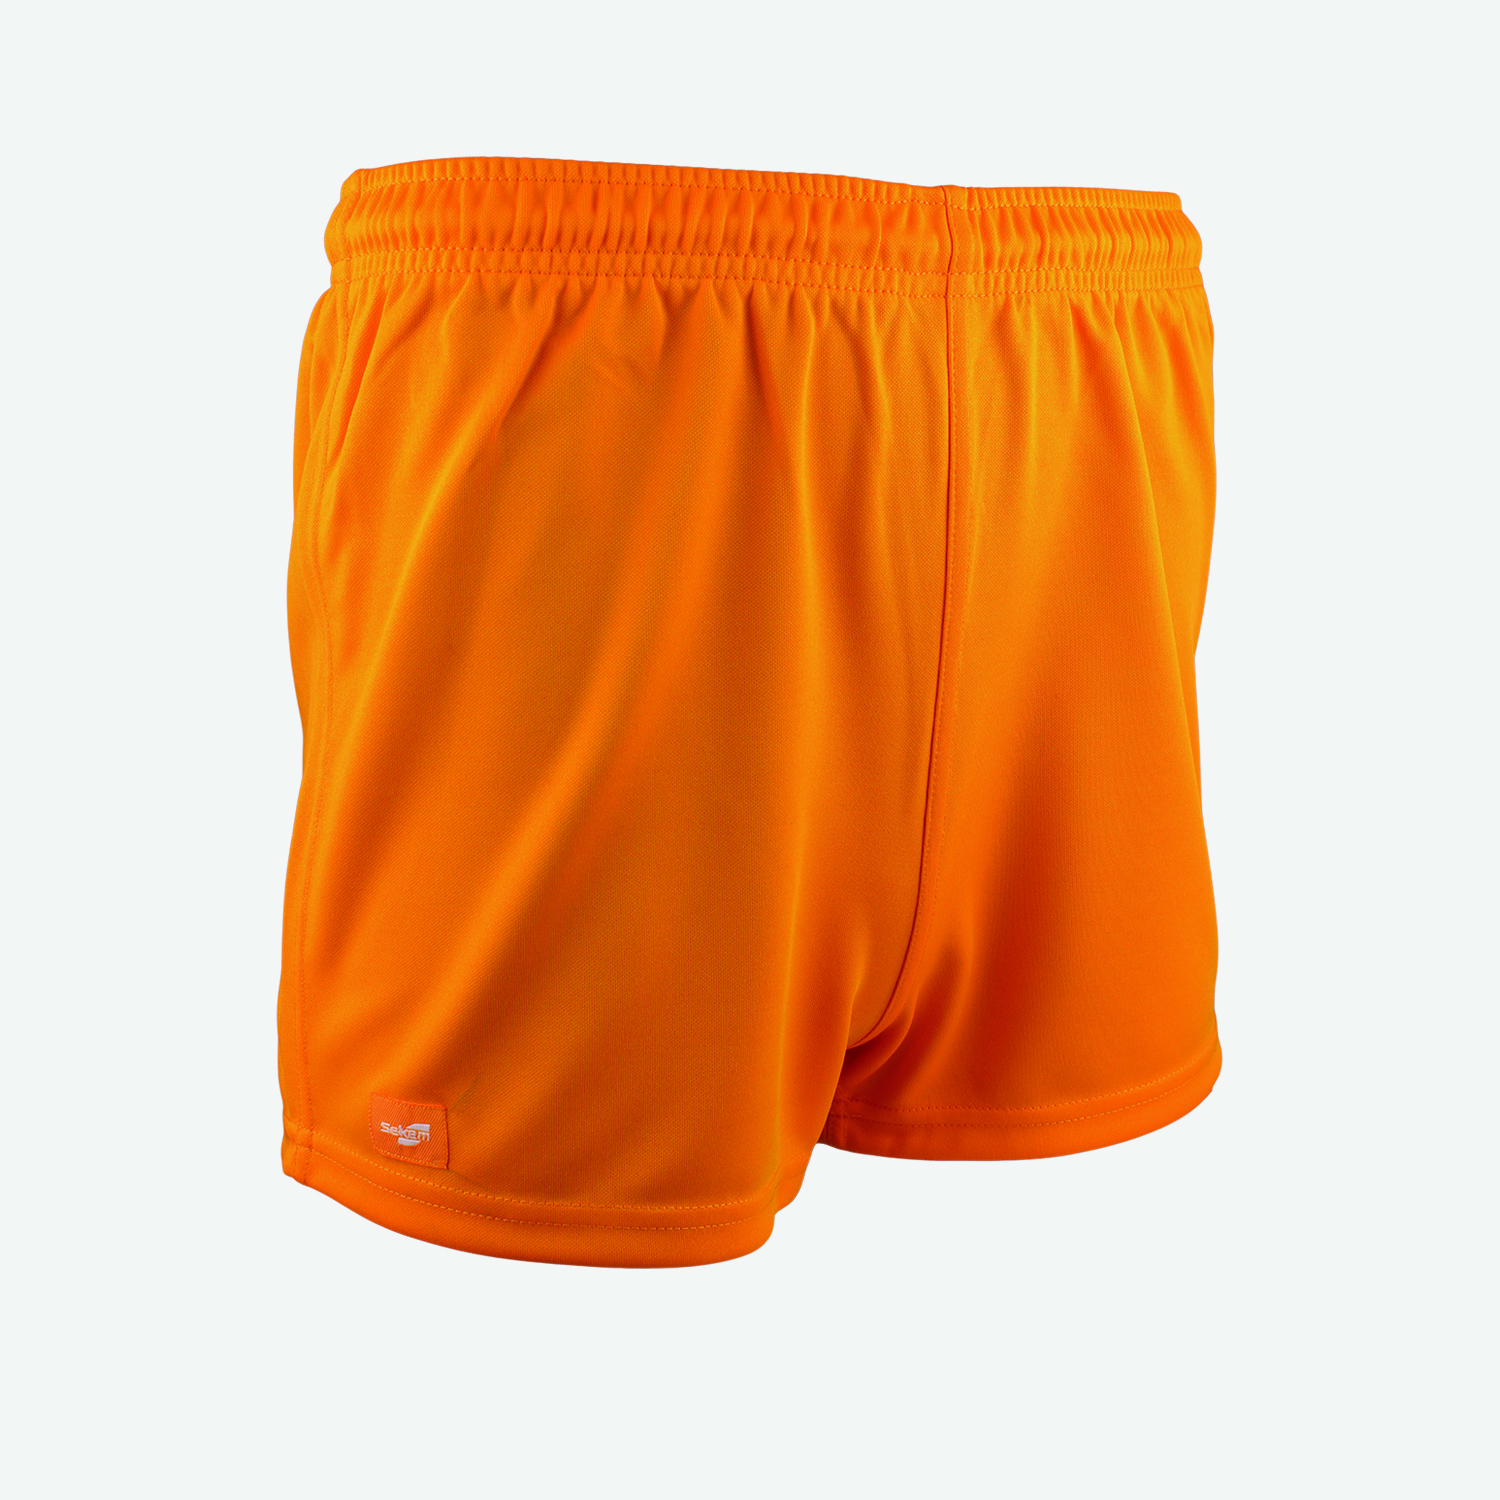 Sekem Junior Football Shorts